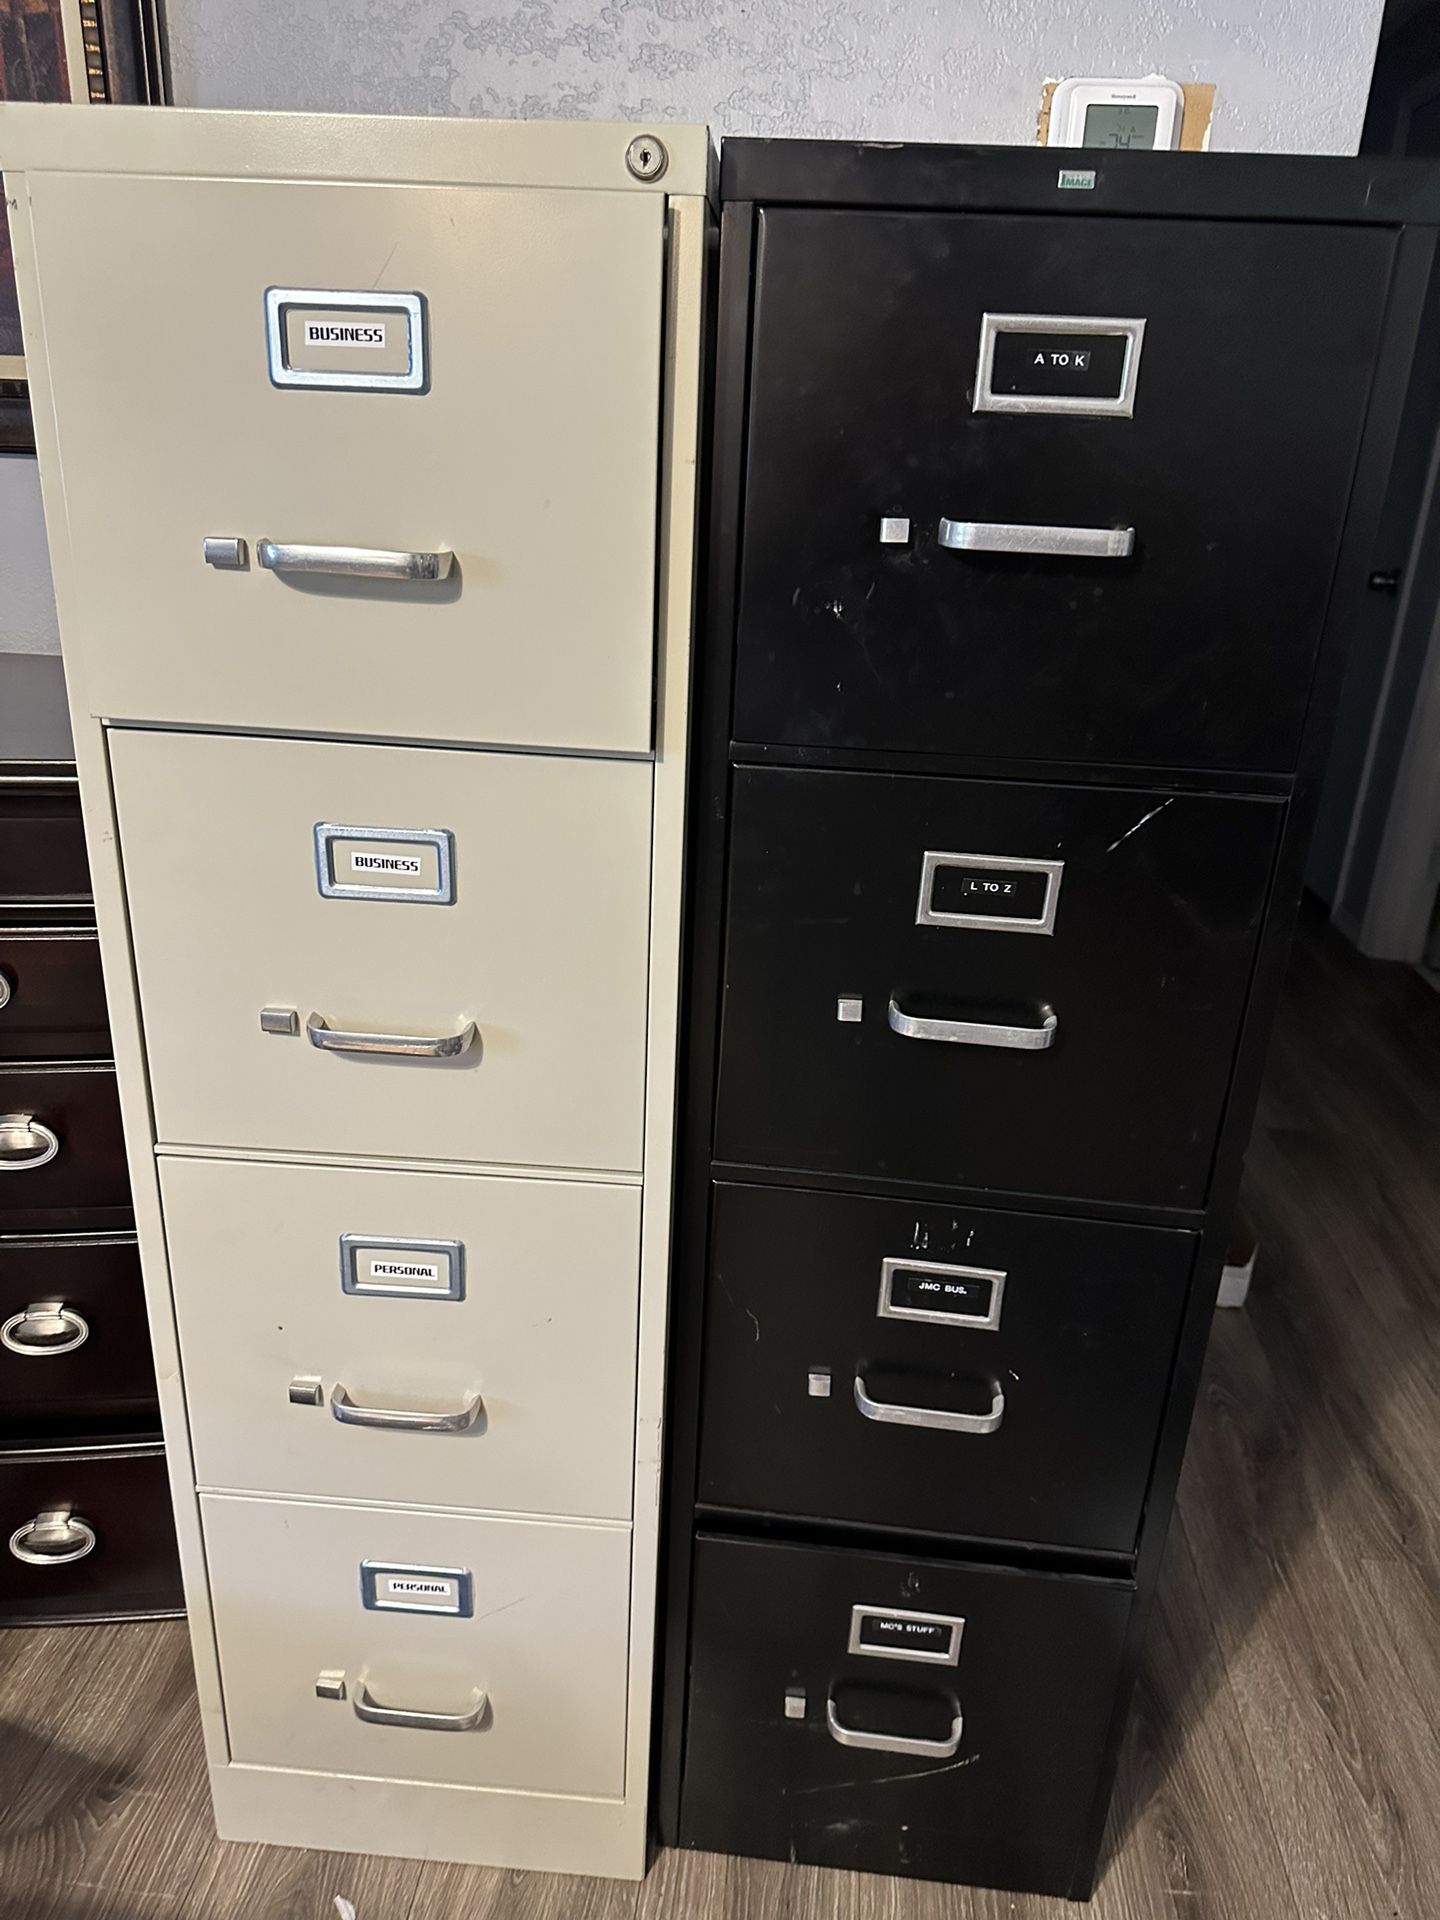 2 File cabinets